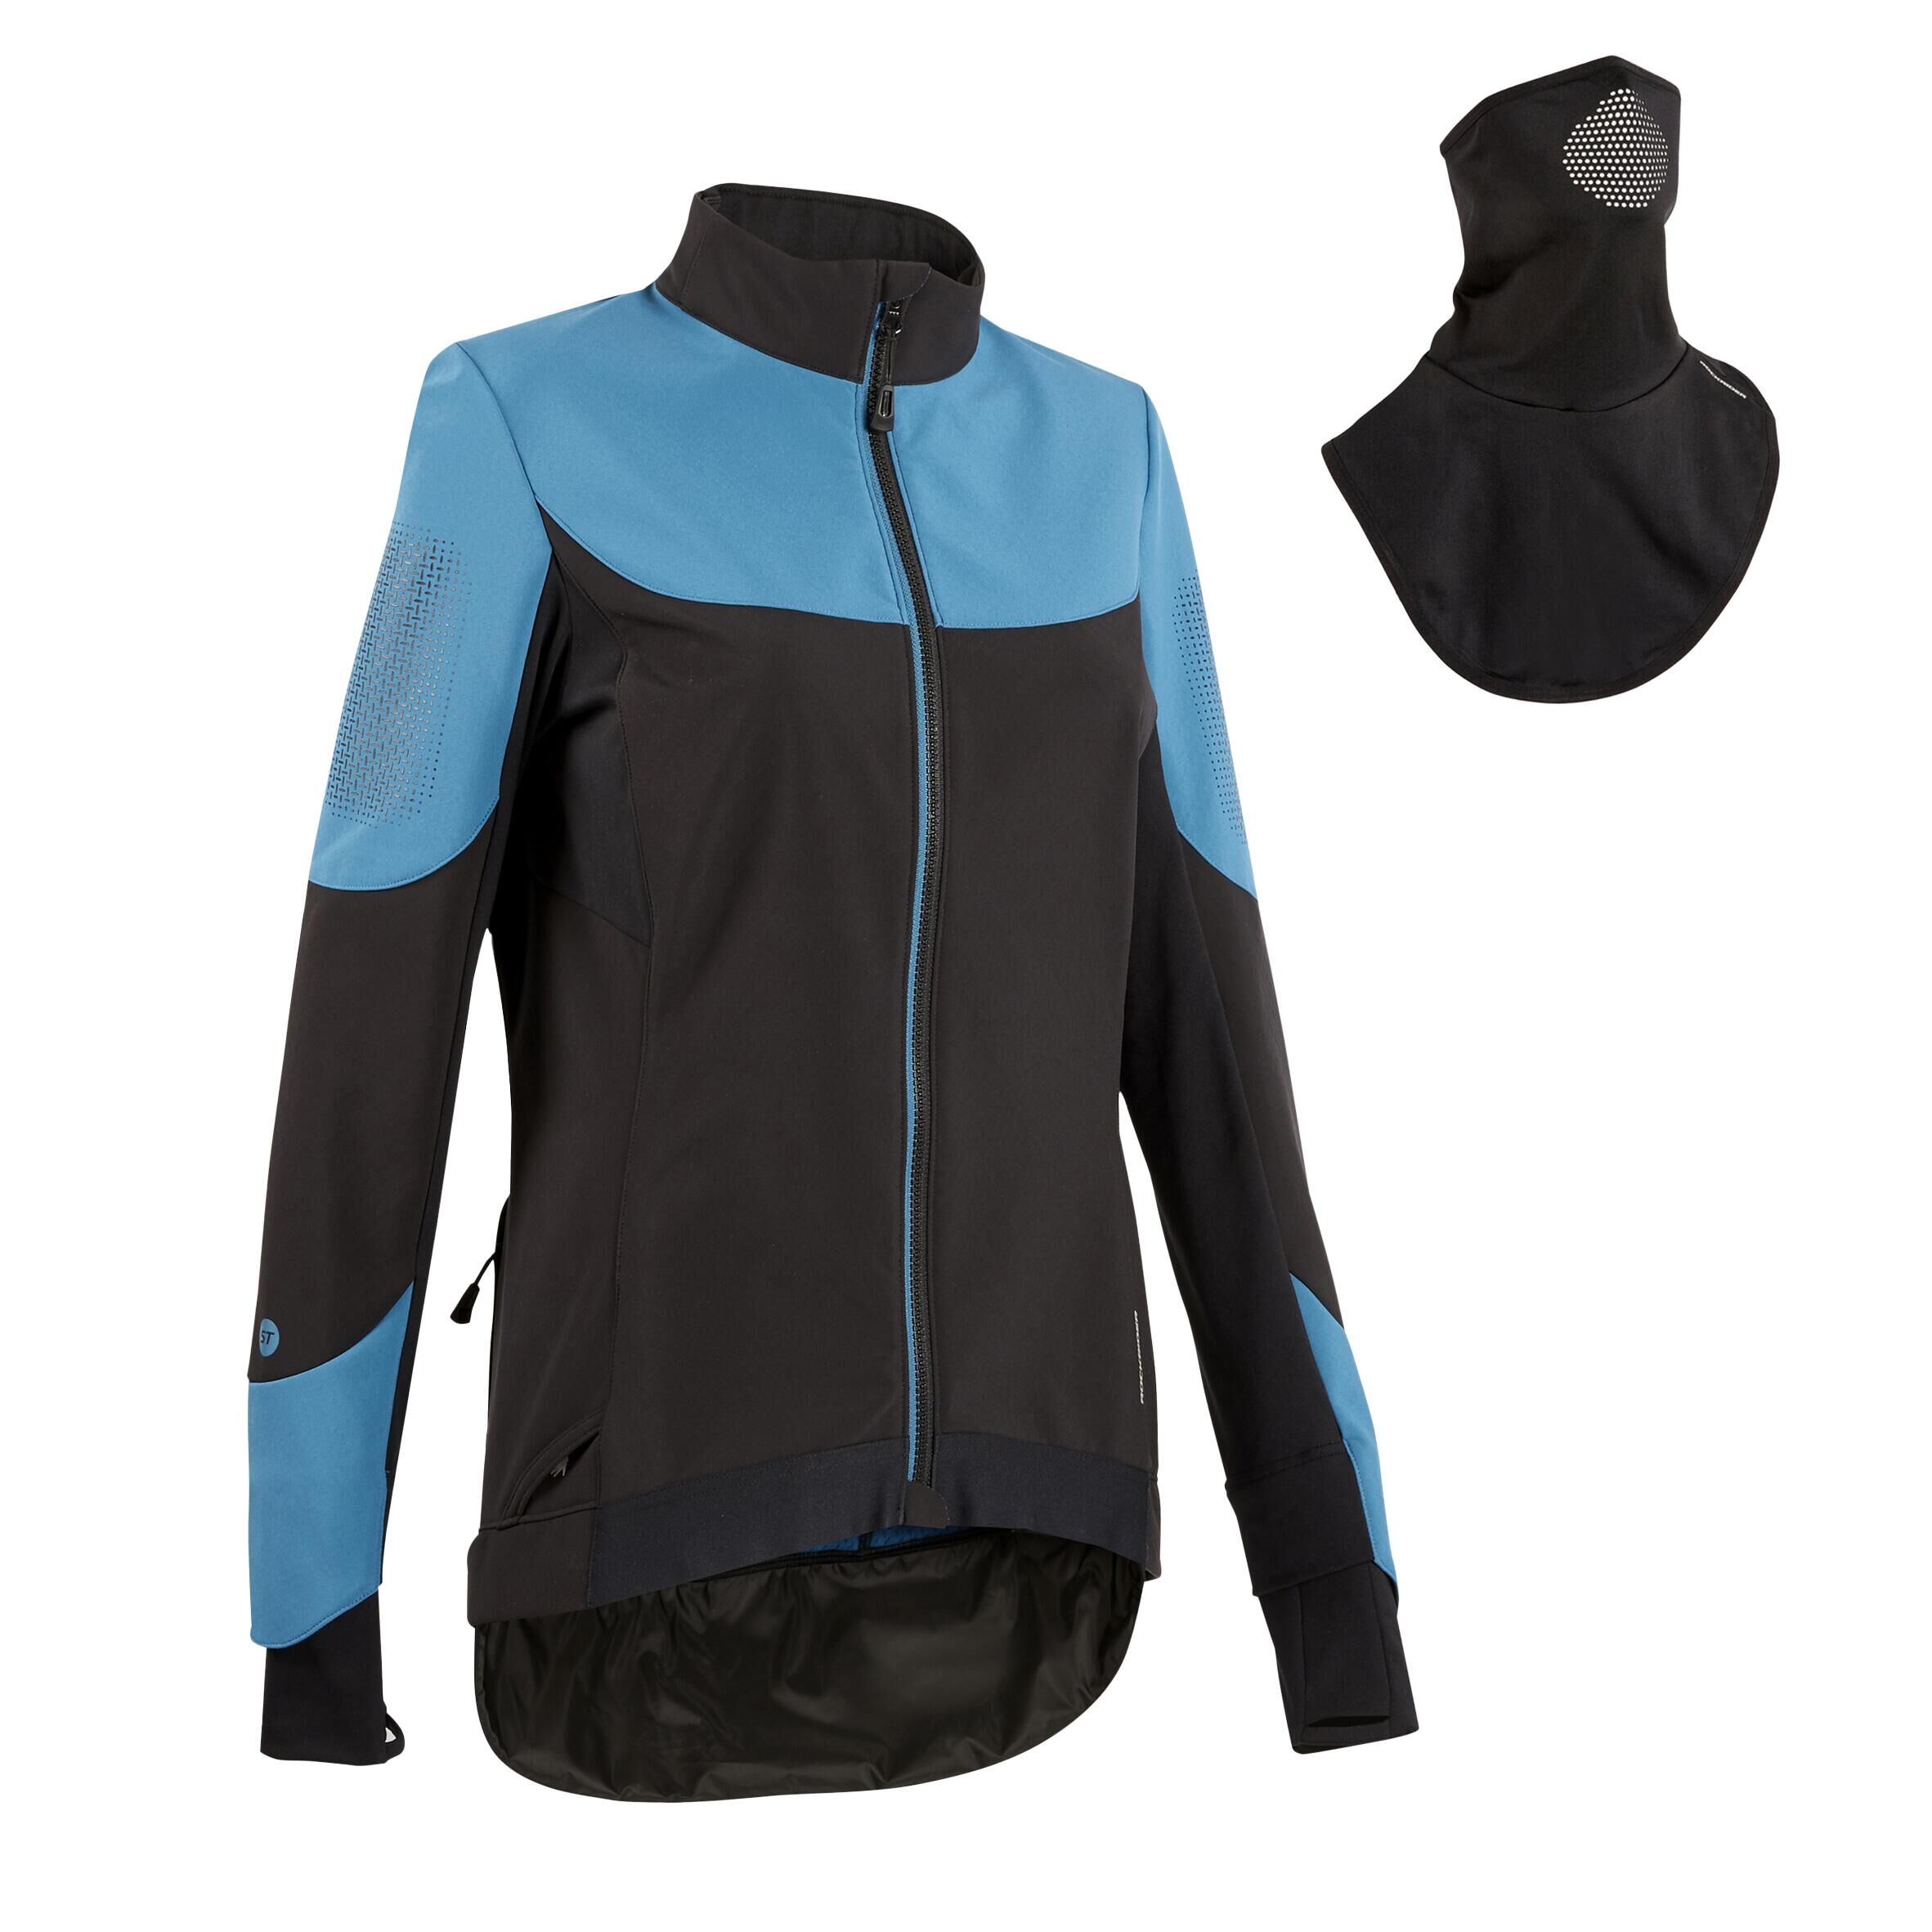 ROCKRIDER Women's Winter Mountain Bike Jacket - Turquoise/Black